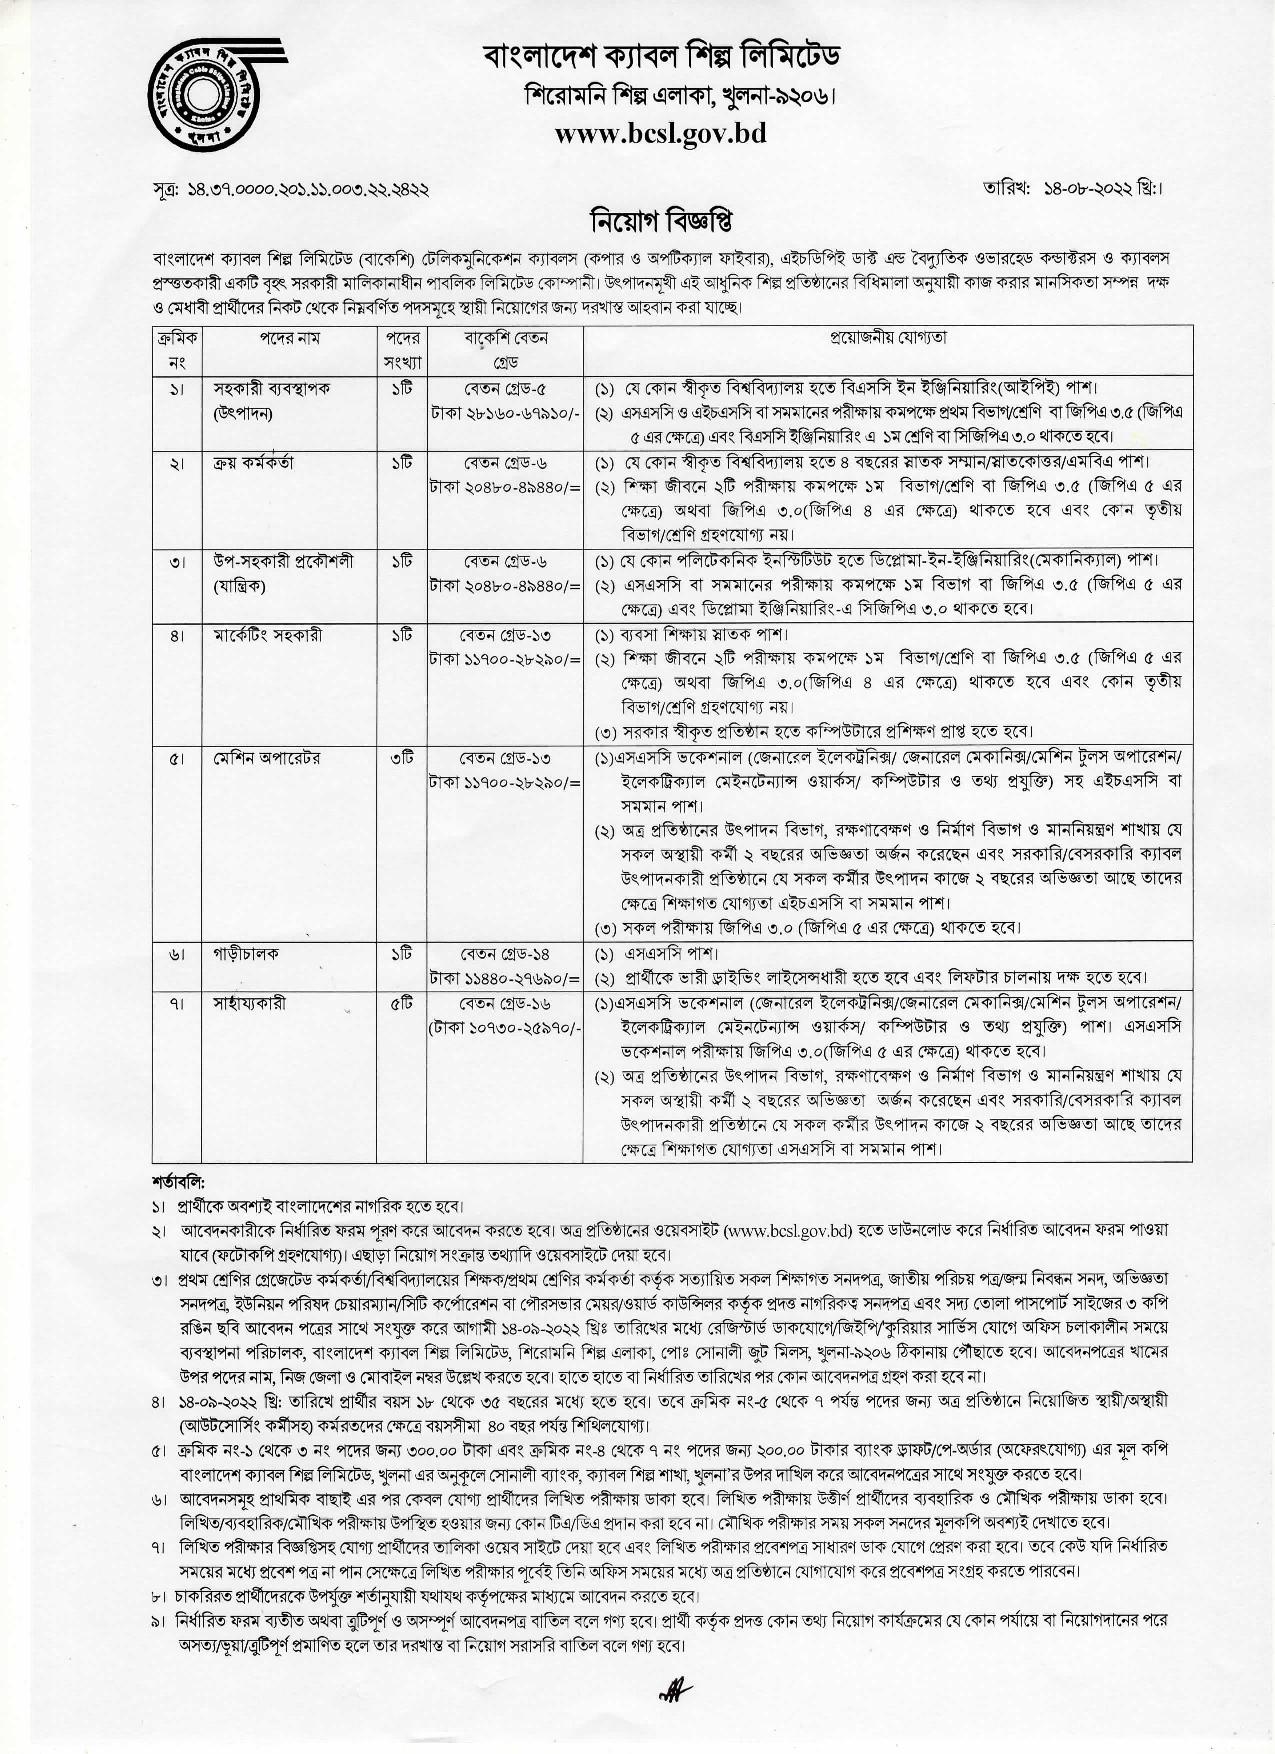 Bangladesh Cable Shilpa Limited Job Circular 2022